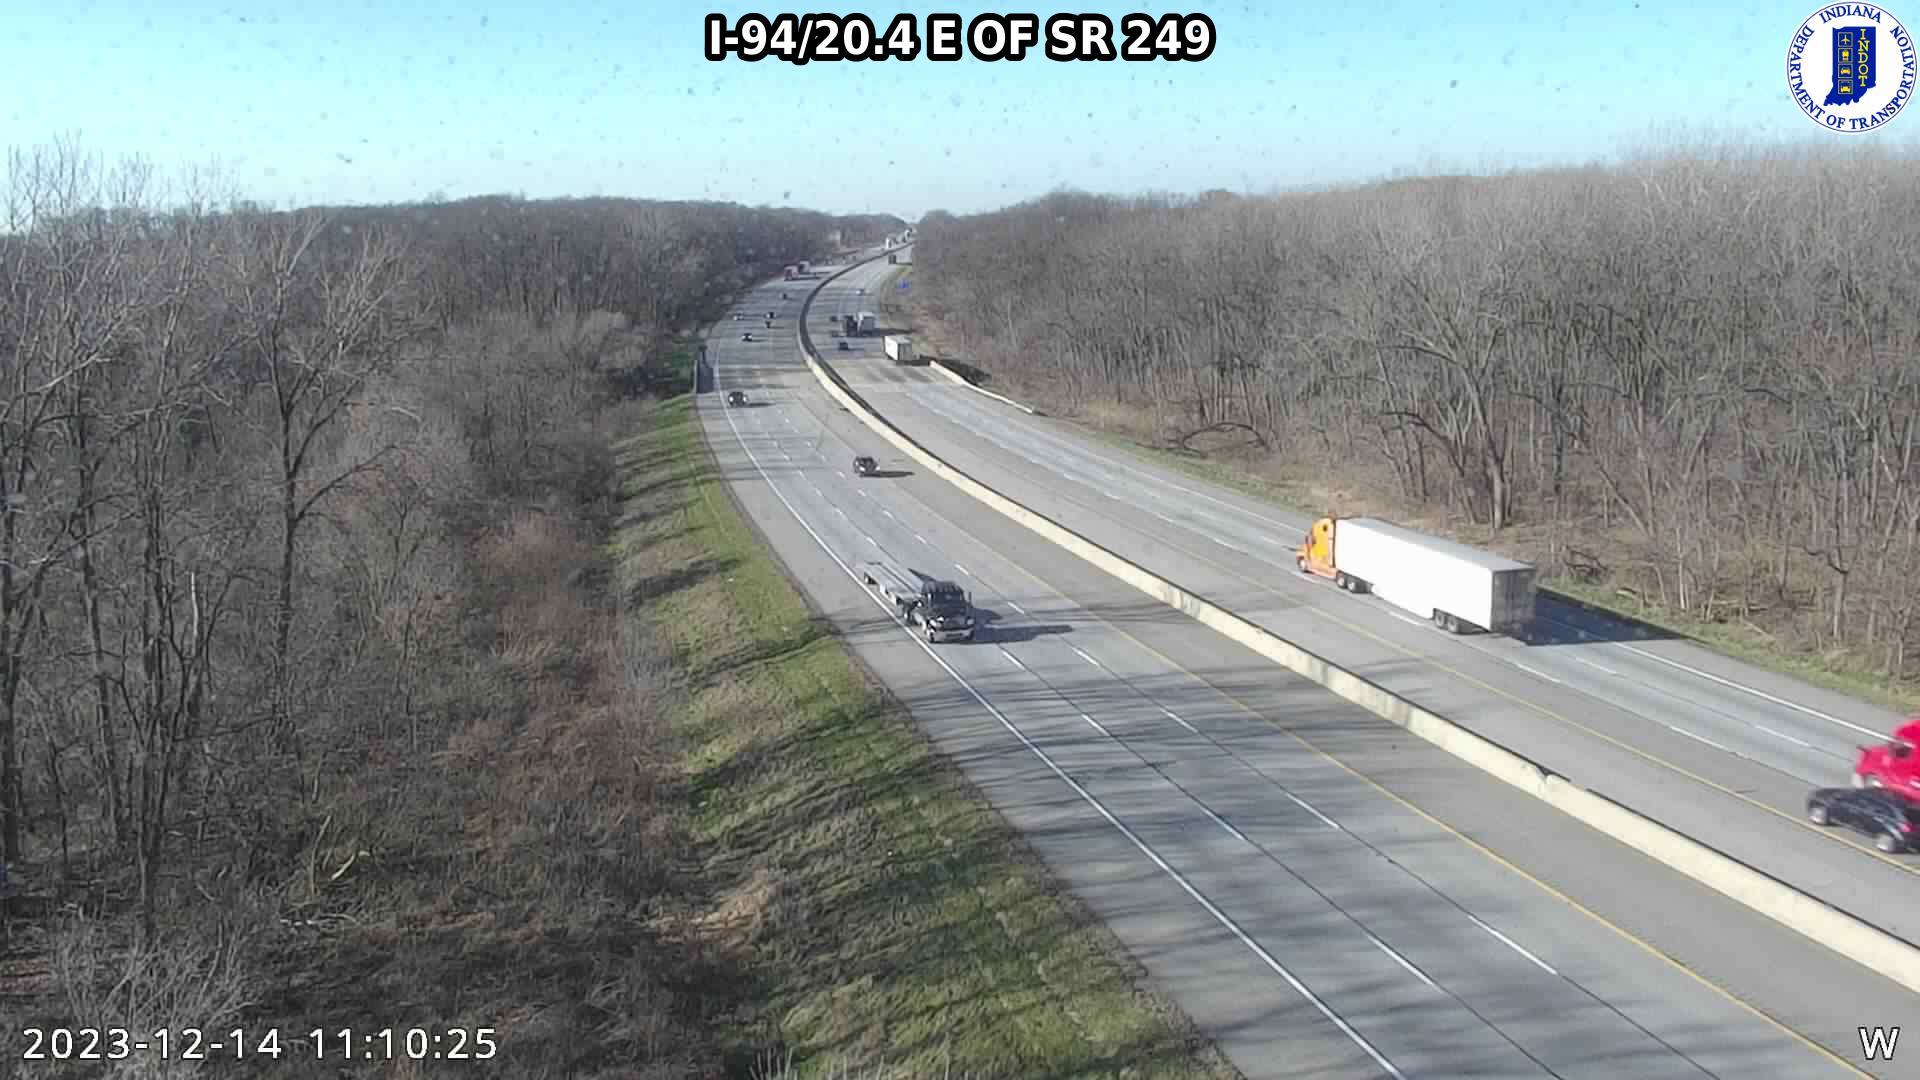 Portage: I-94: I-94/20.4 E OF SR 249 : I-94/20.4 E OF SR 249 Traffic Camera